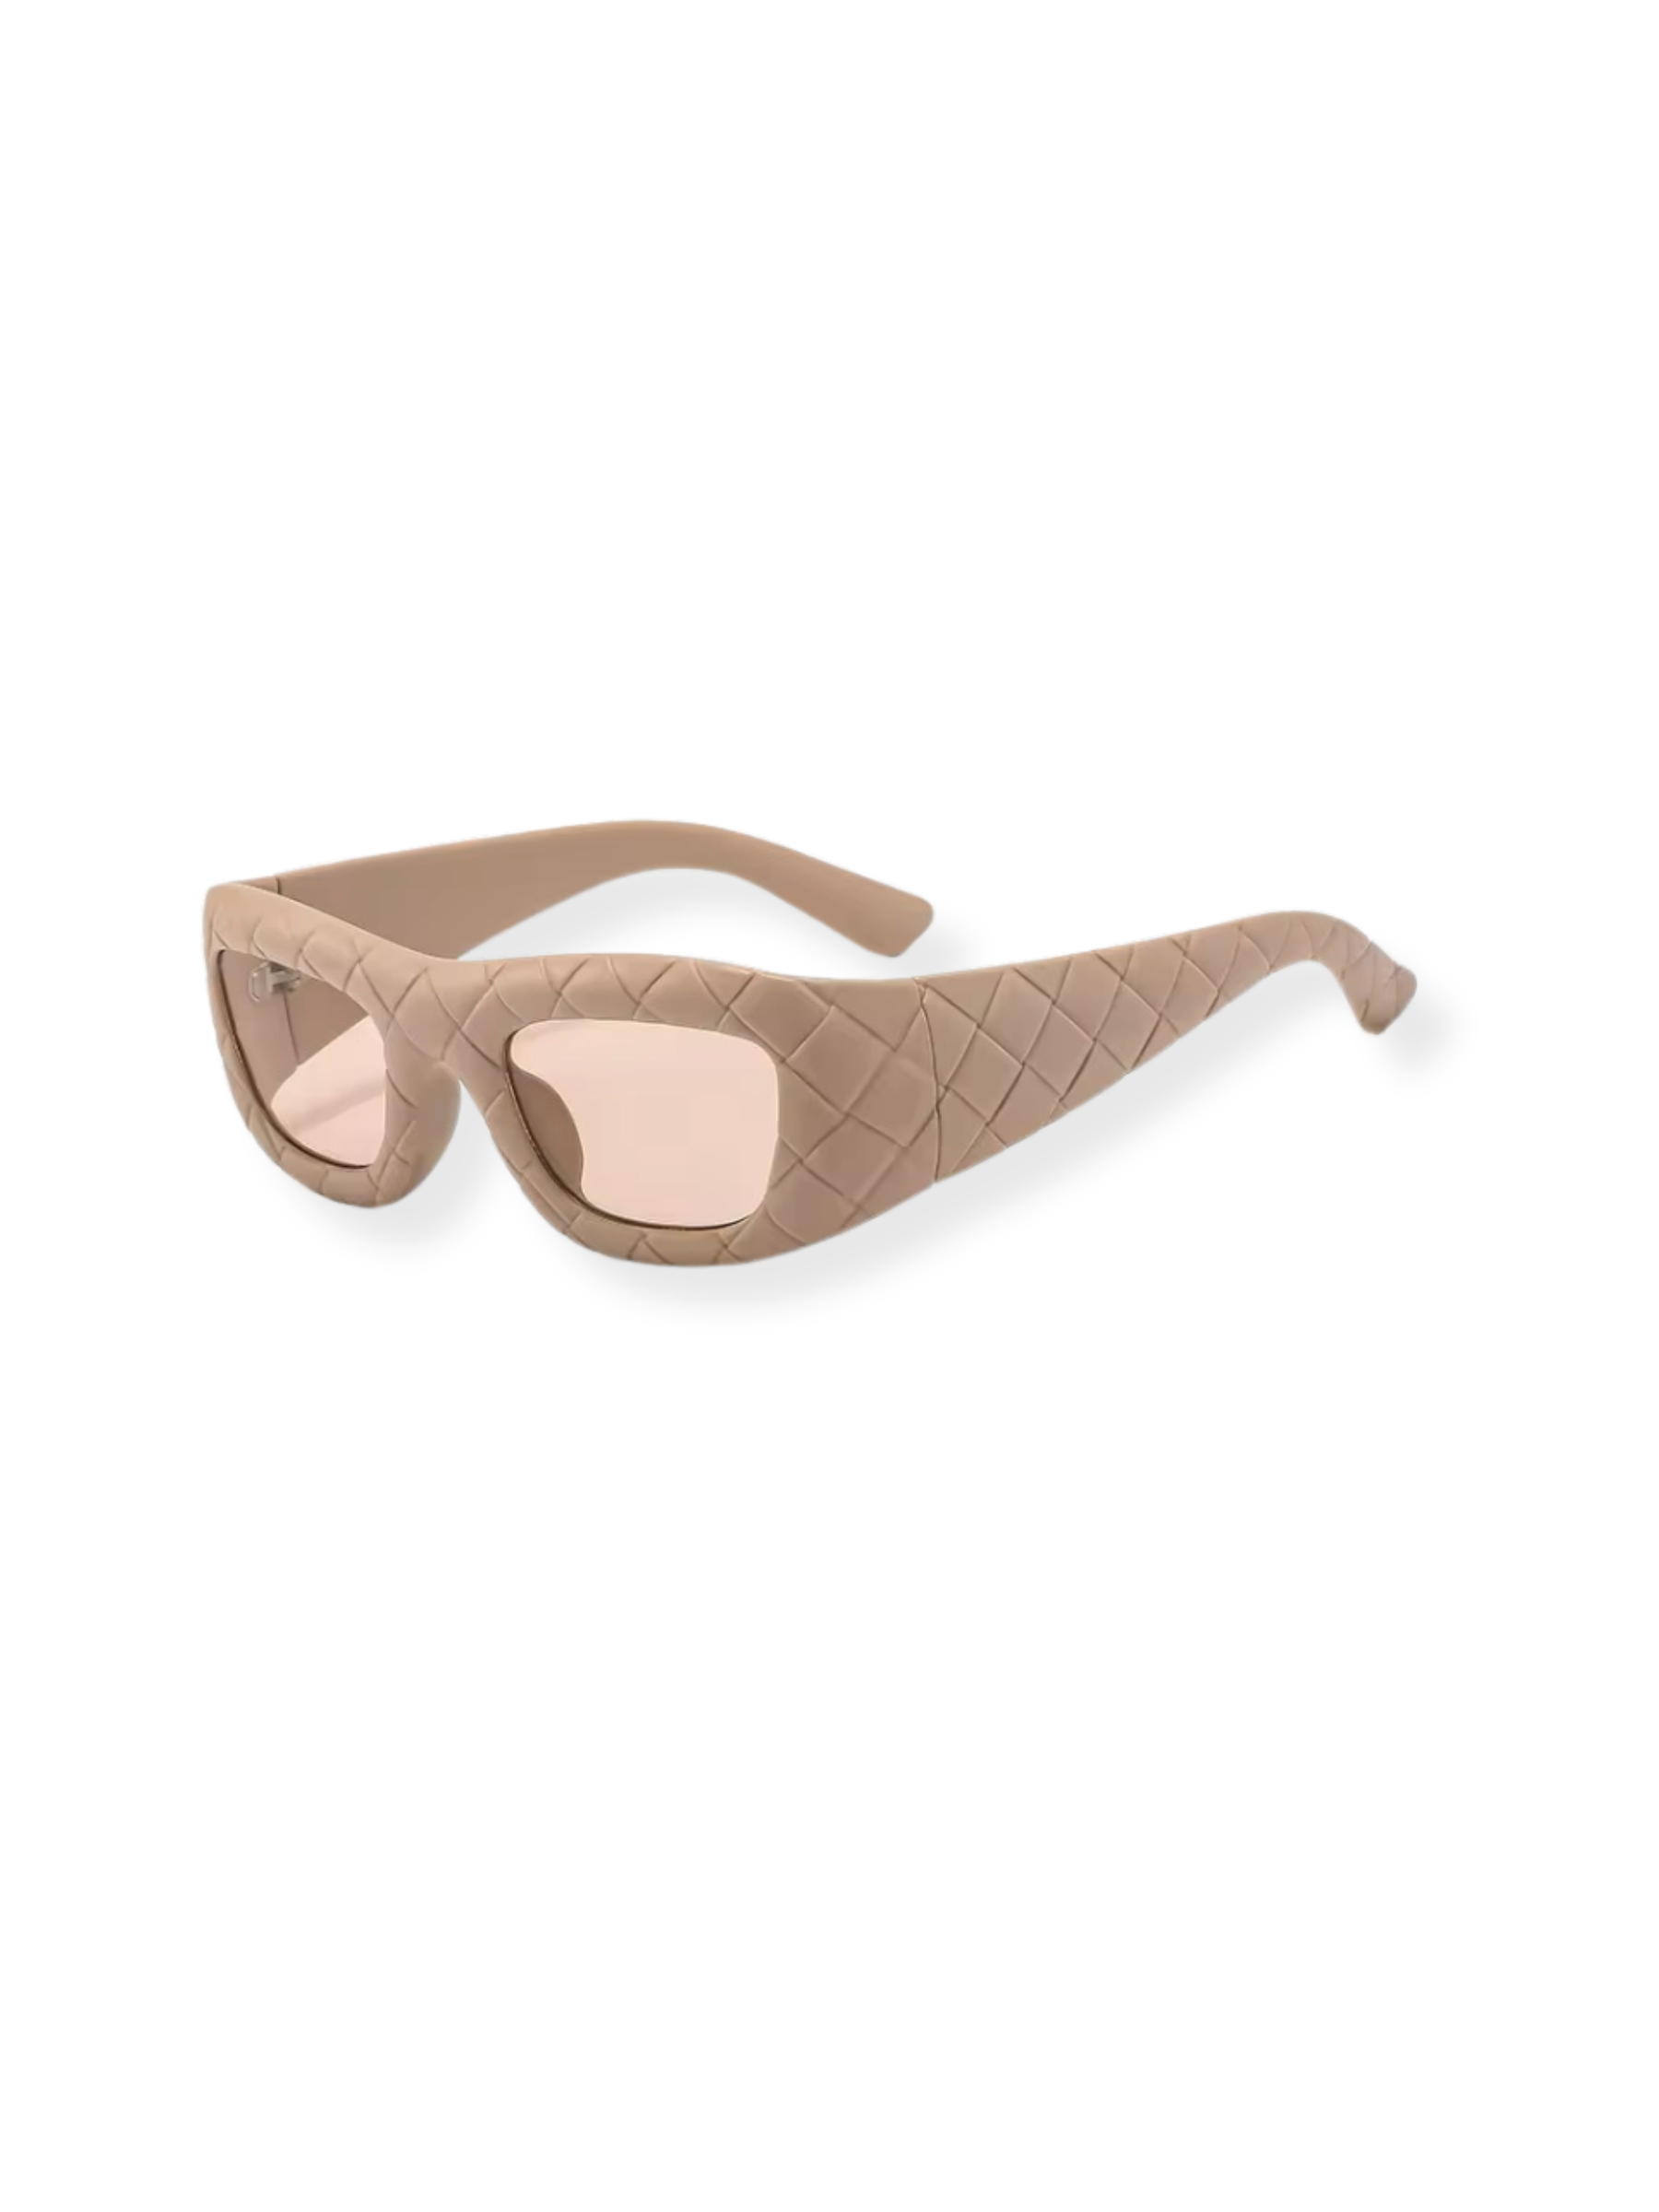 GOLDxTEAL chic lattice frame sunglasses.